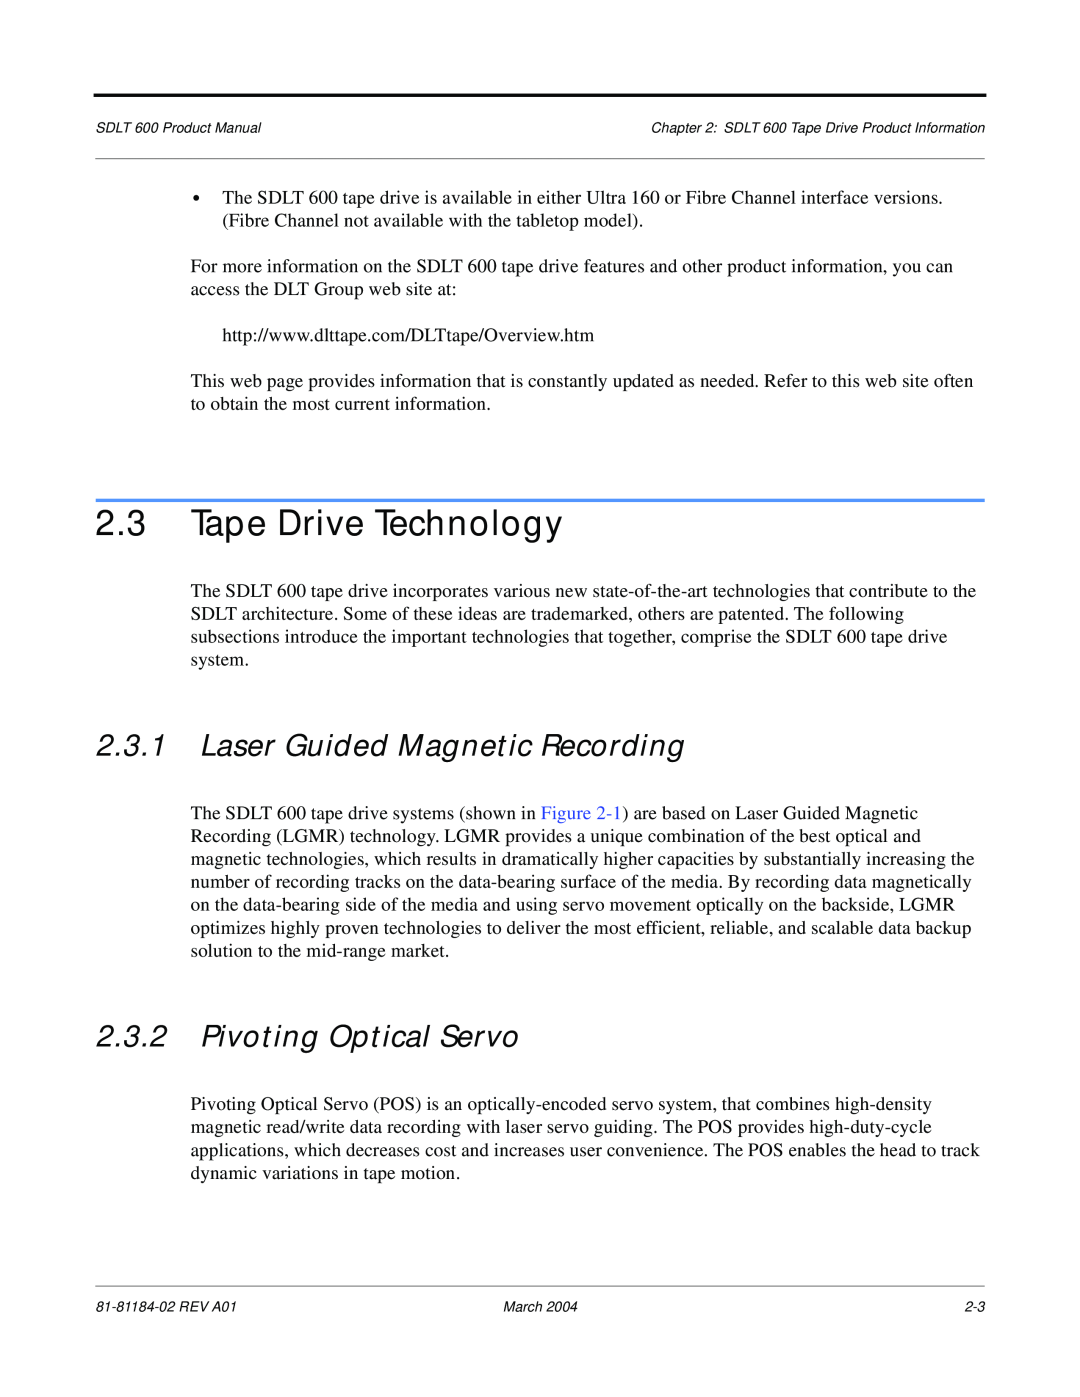 Tandberg Data 600 manual Tape Drive Technology, Laser Guided Magnetic Recording, Pivoting Optical Servo 